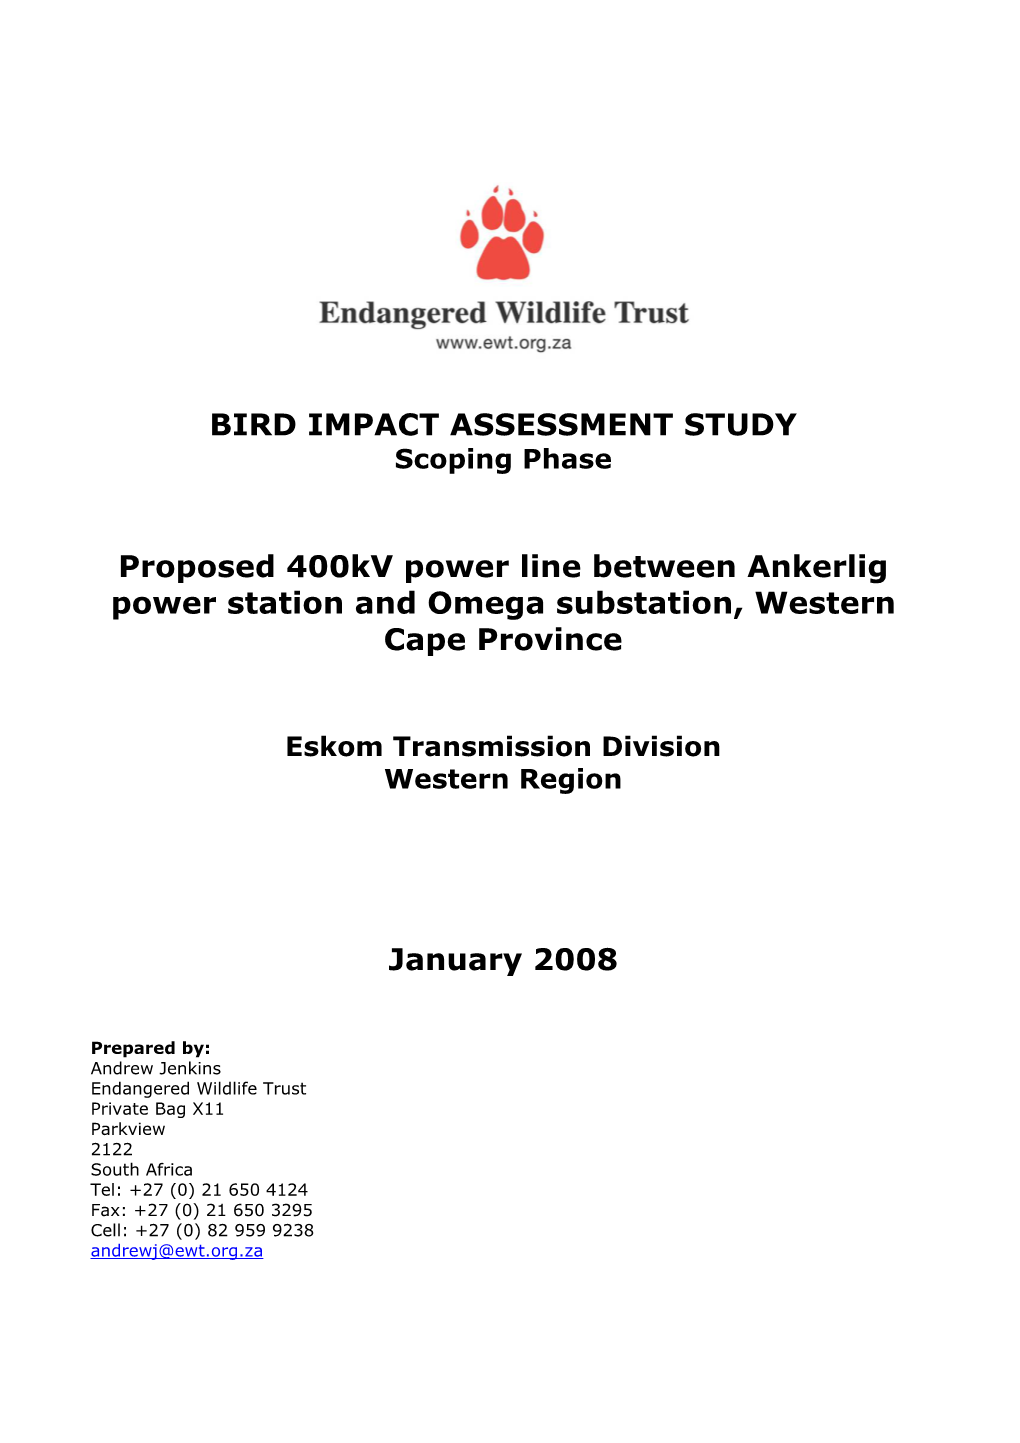 BIRD IMPACT ASSESSMENT STUDY Proposed 400Kv Power Line